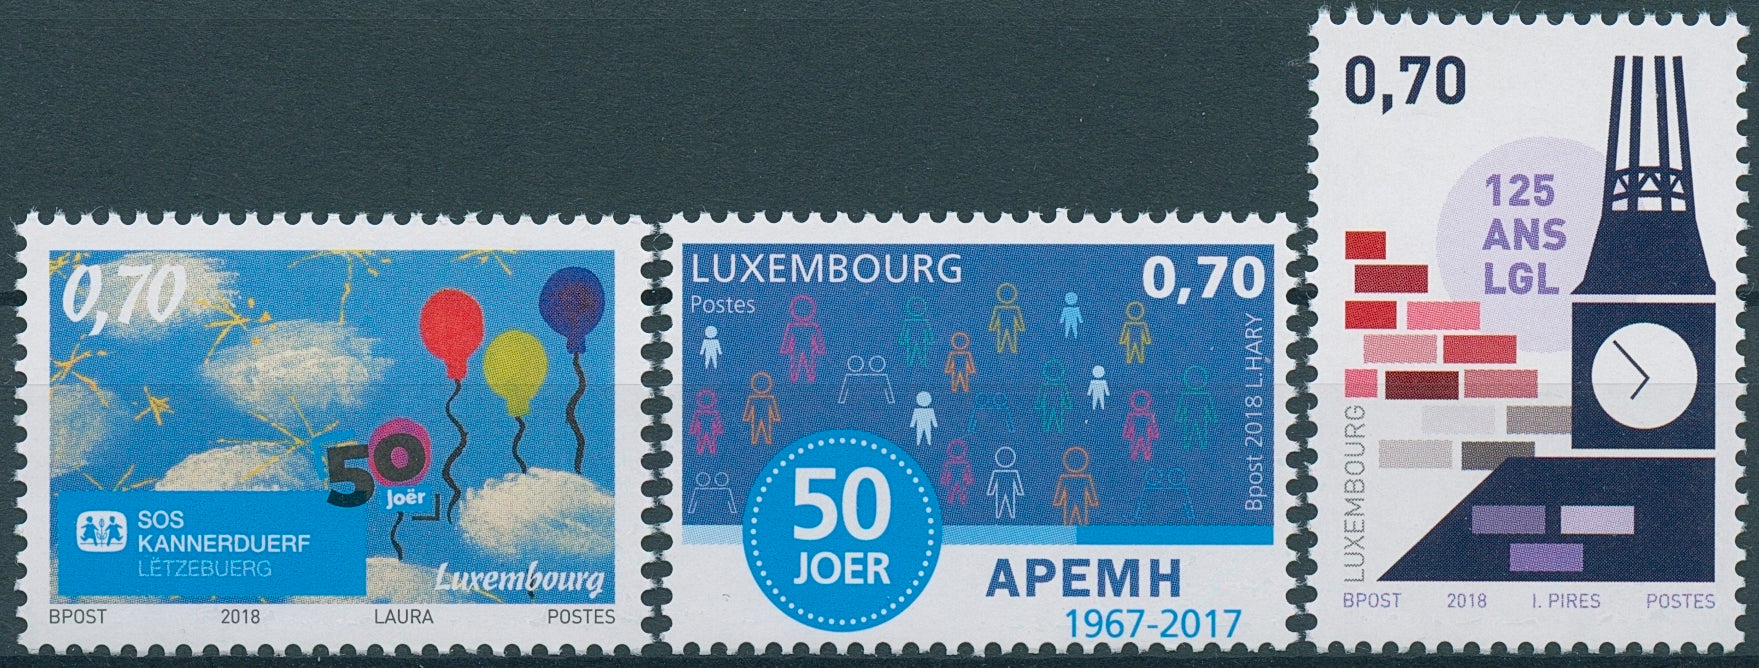 Luxembourg 2018 MNH SOS Kannerduerf APEMH LGL Anniversaries 3v Set Stamps